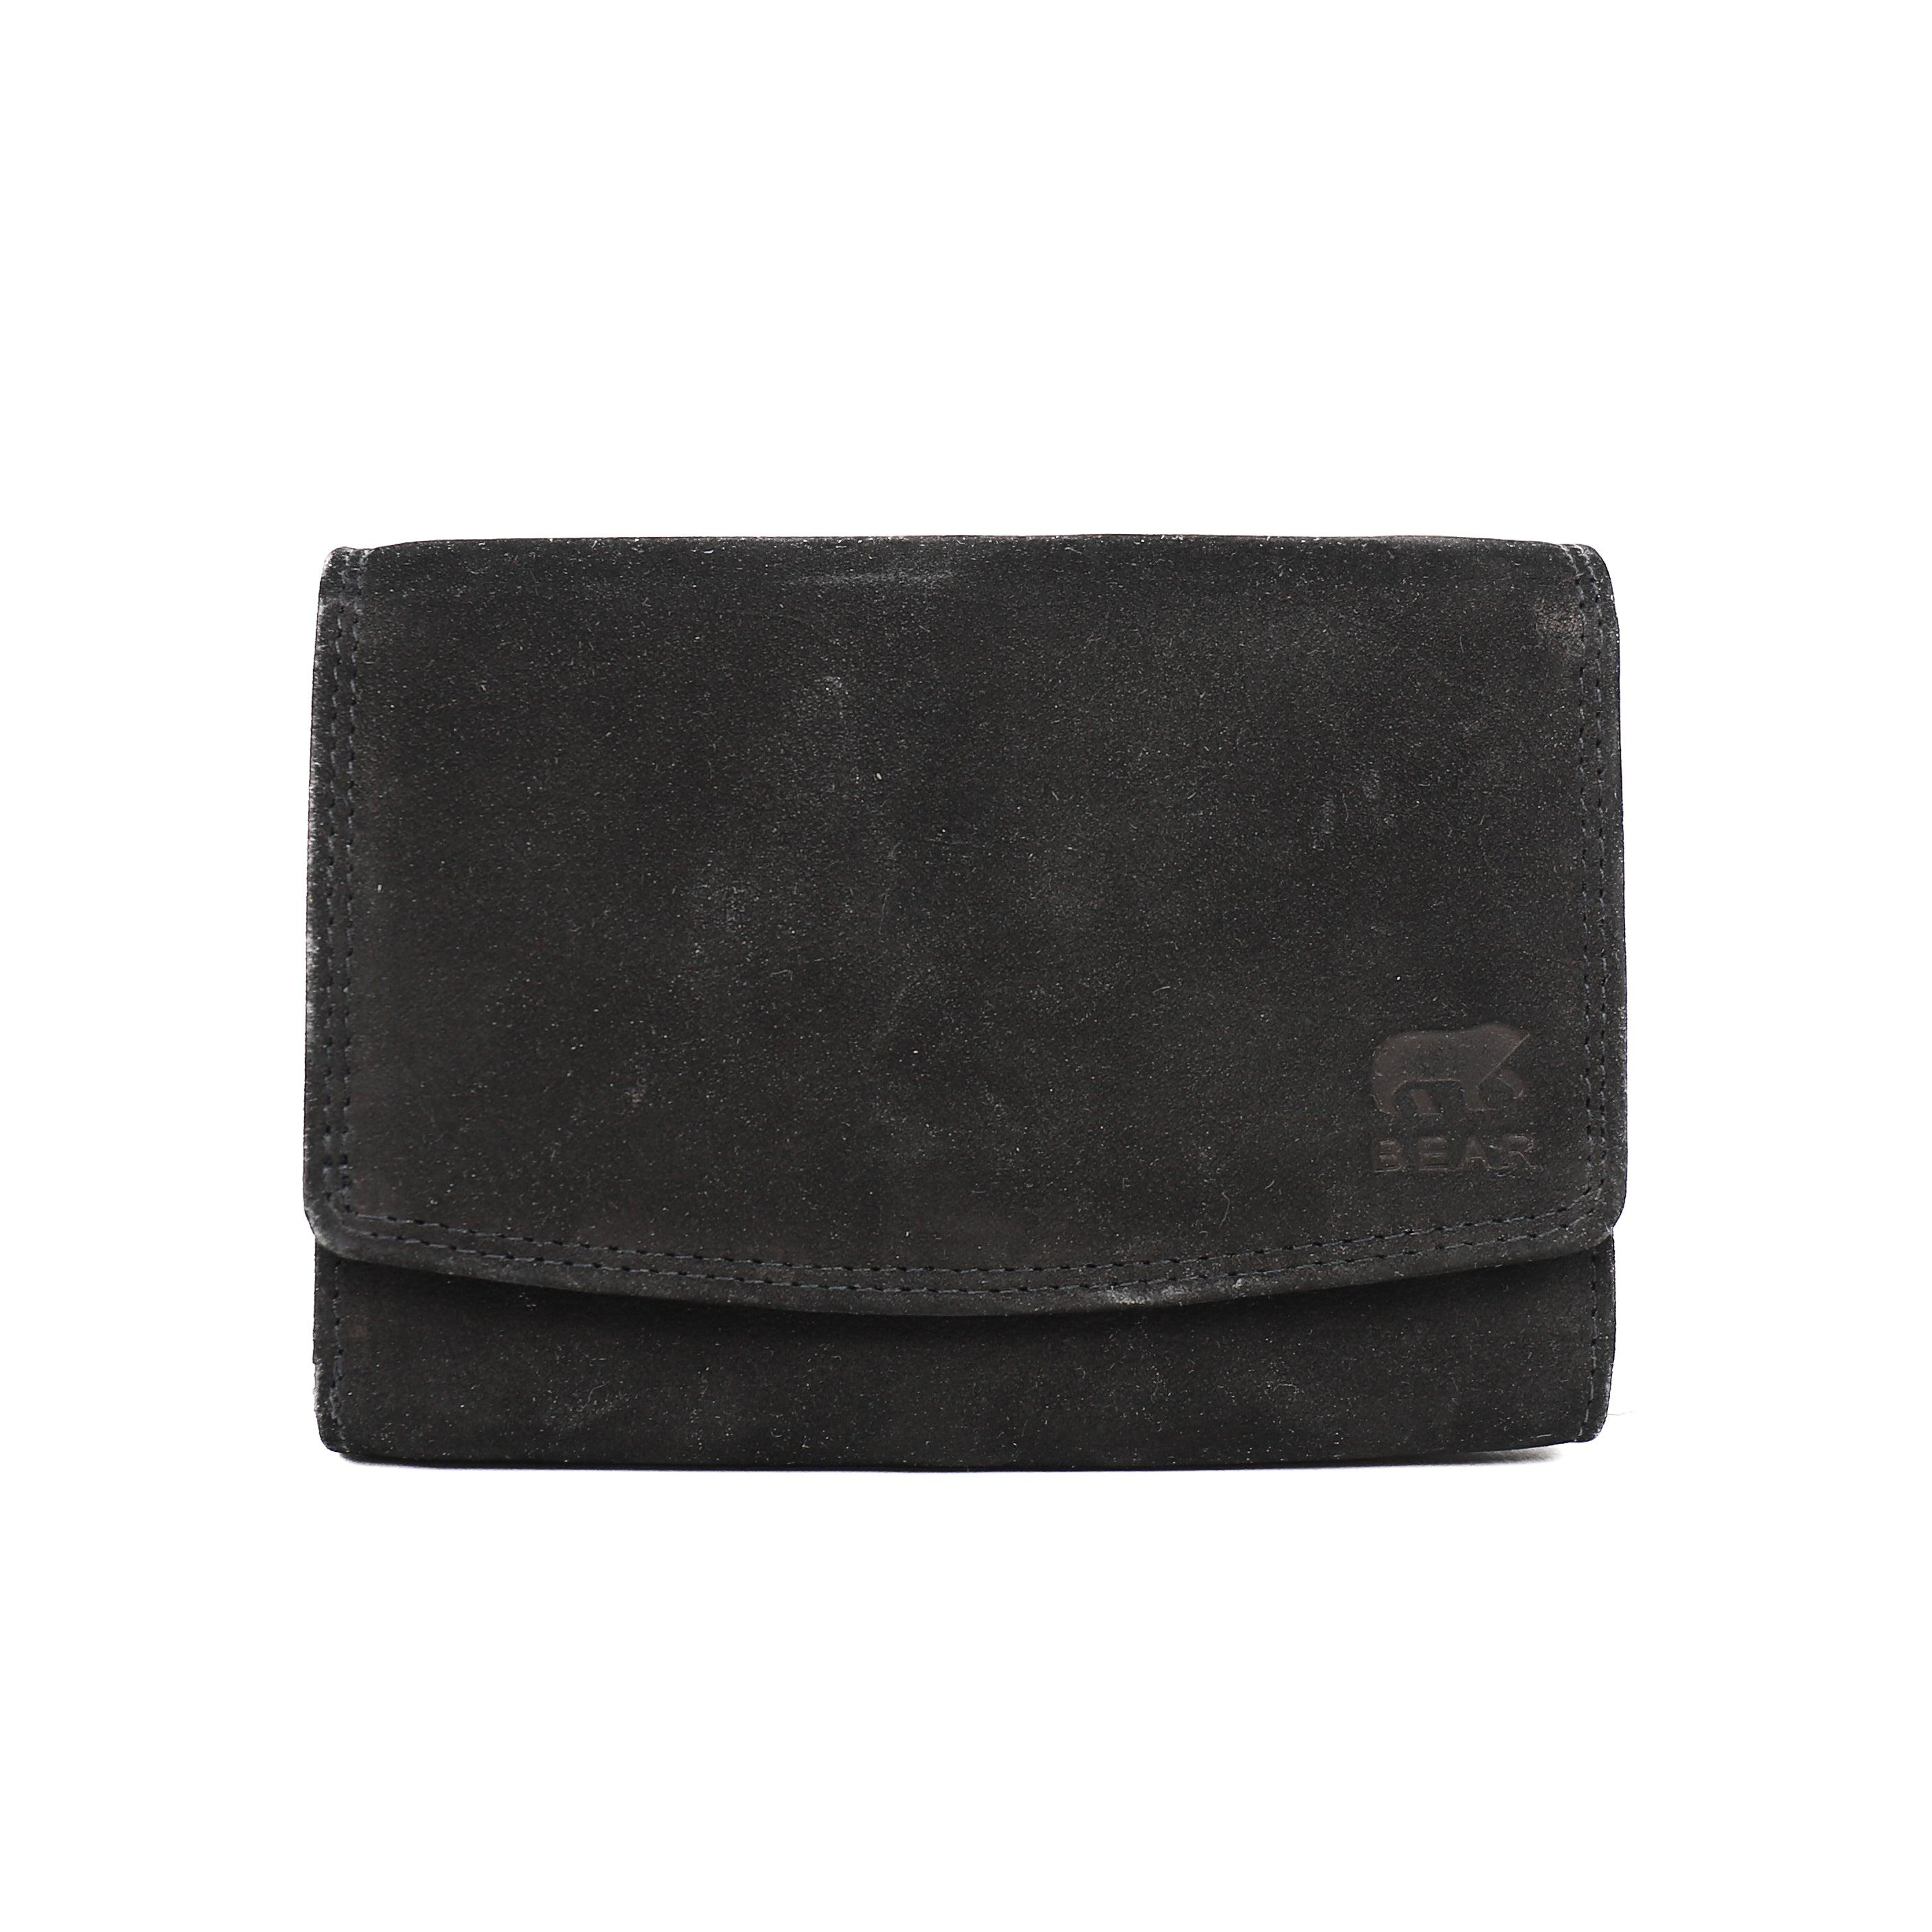 Wallet 'Mardi' black - SL 3901